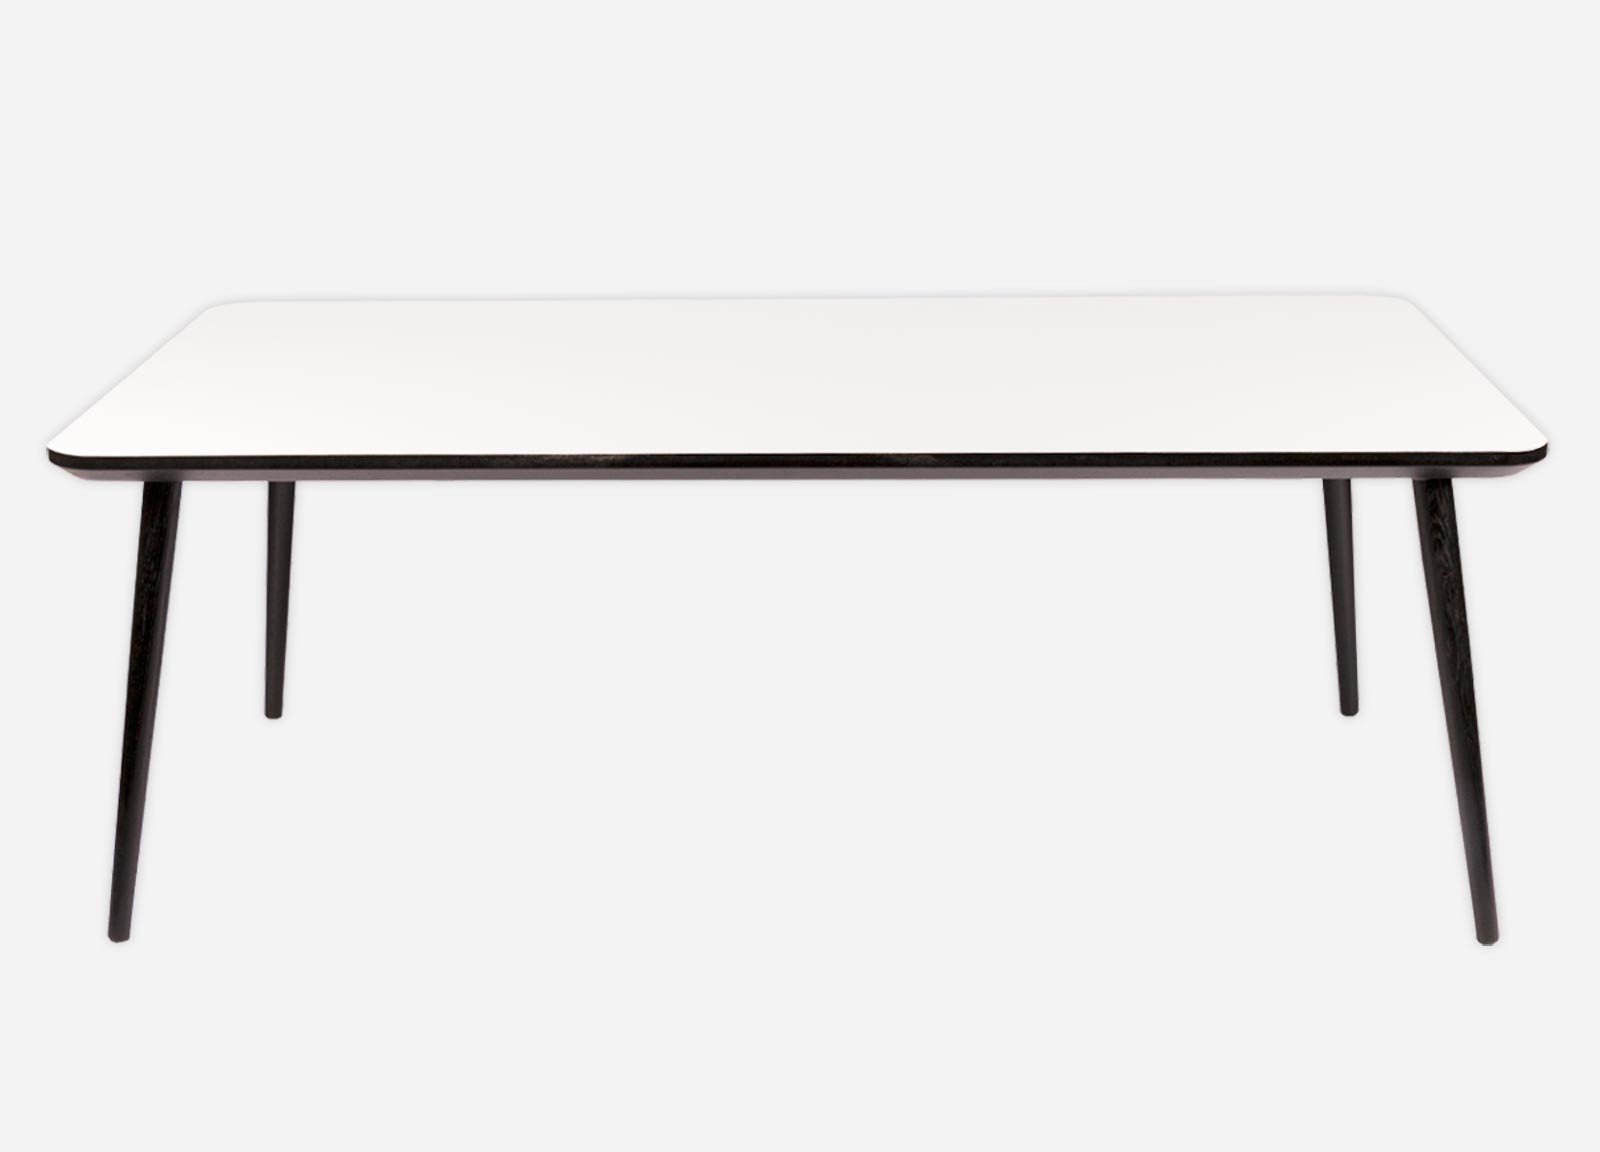 Firkantet sofabord laminat i hvid, sort eller antracit